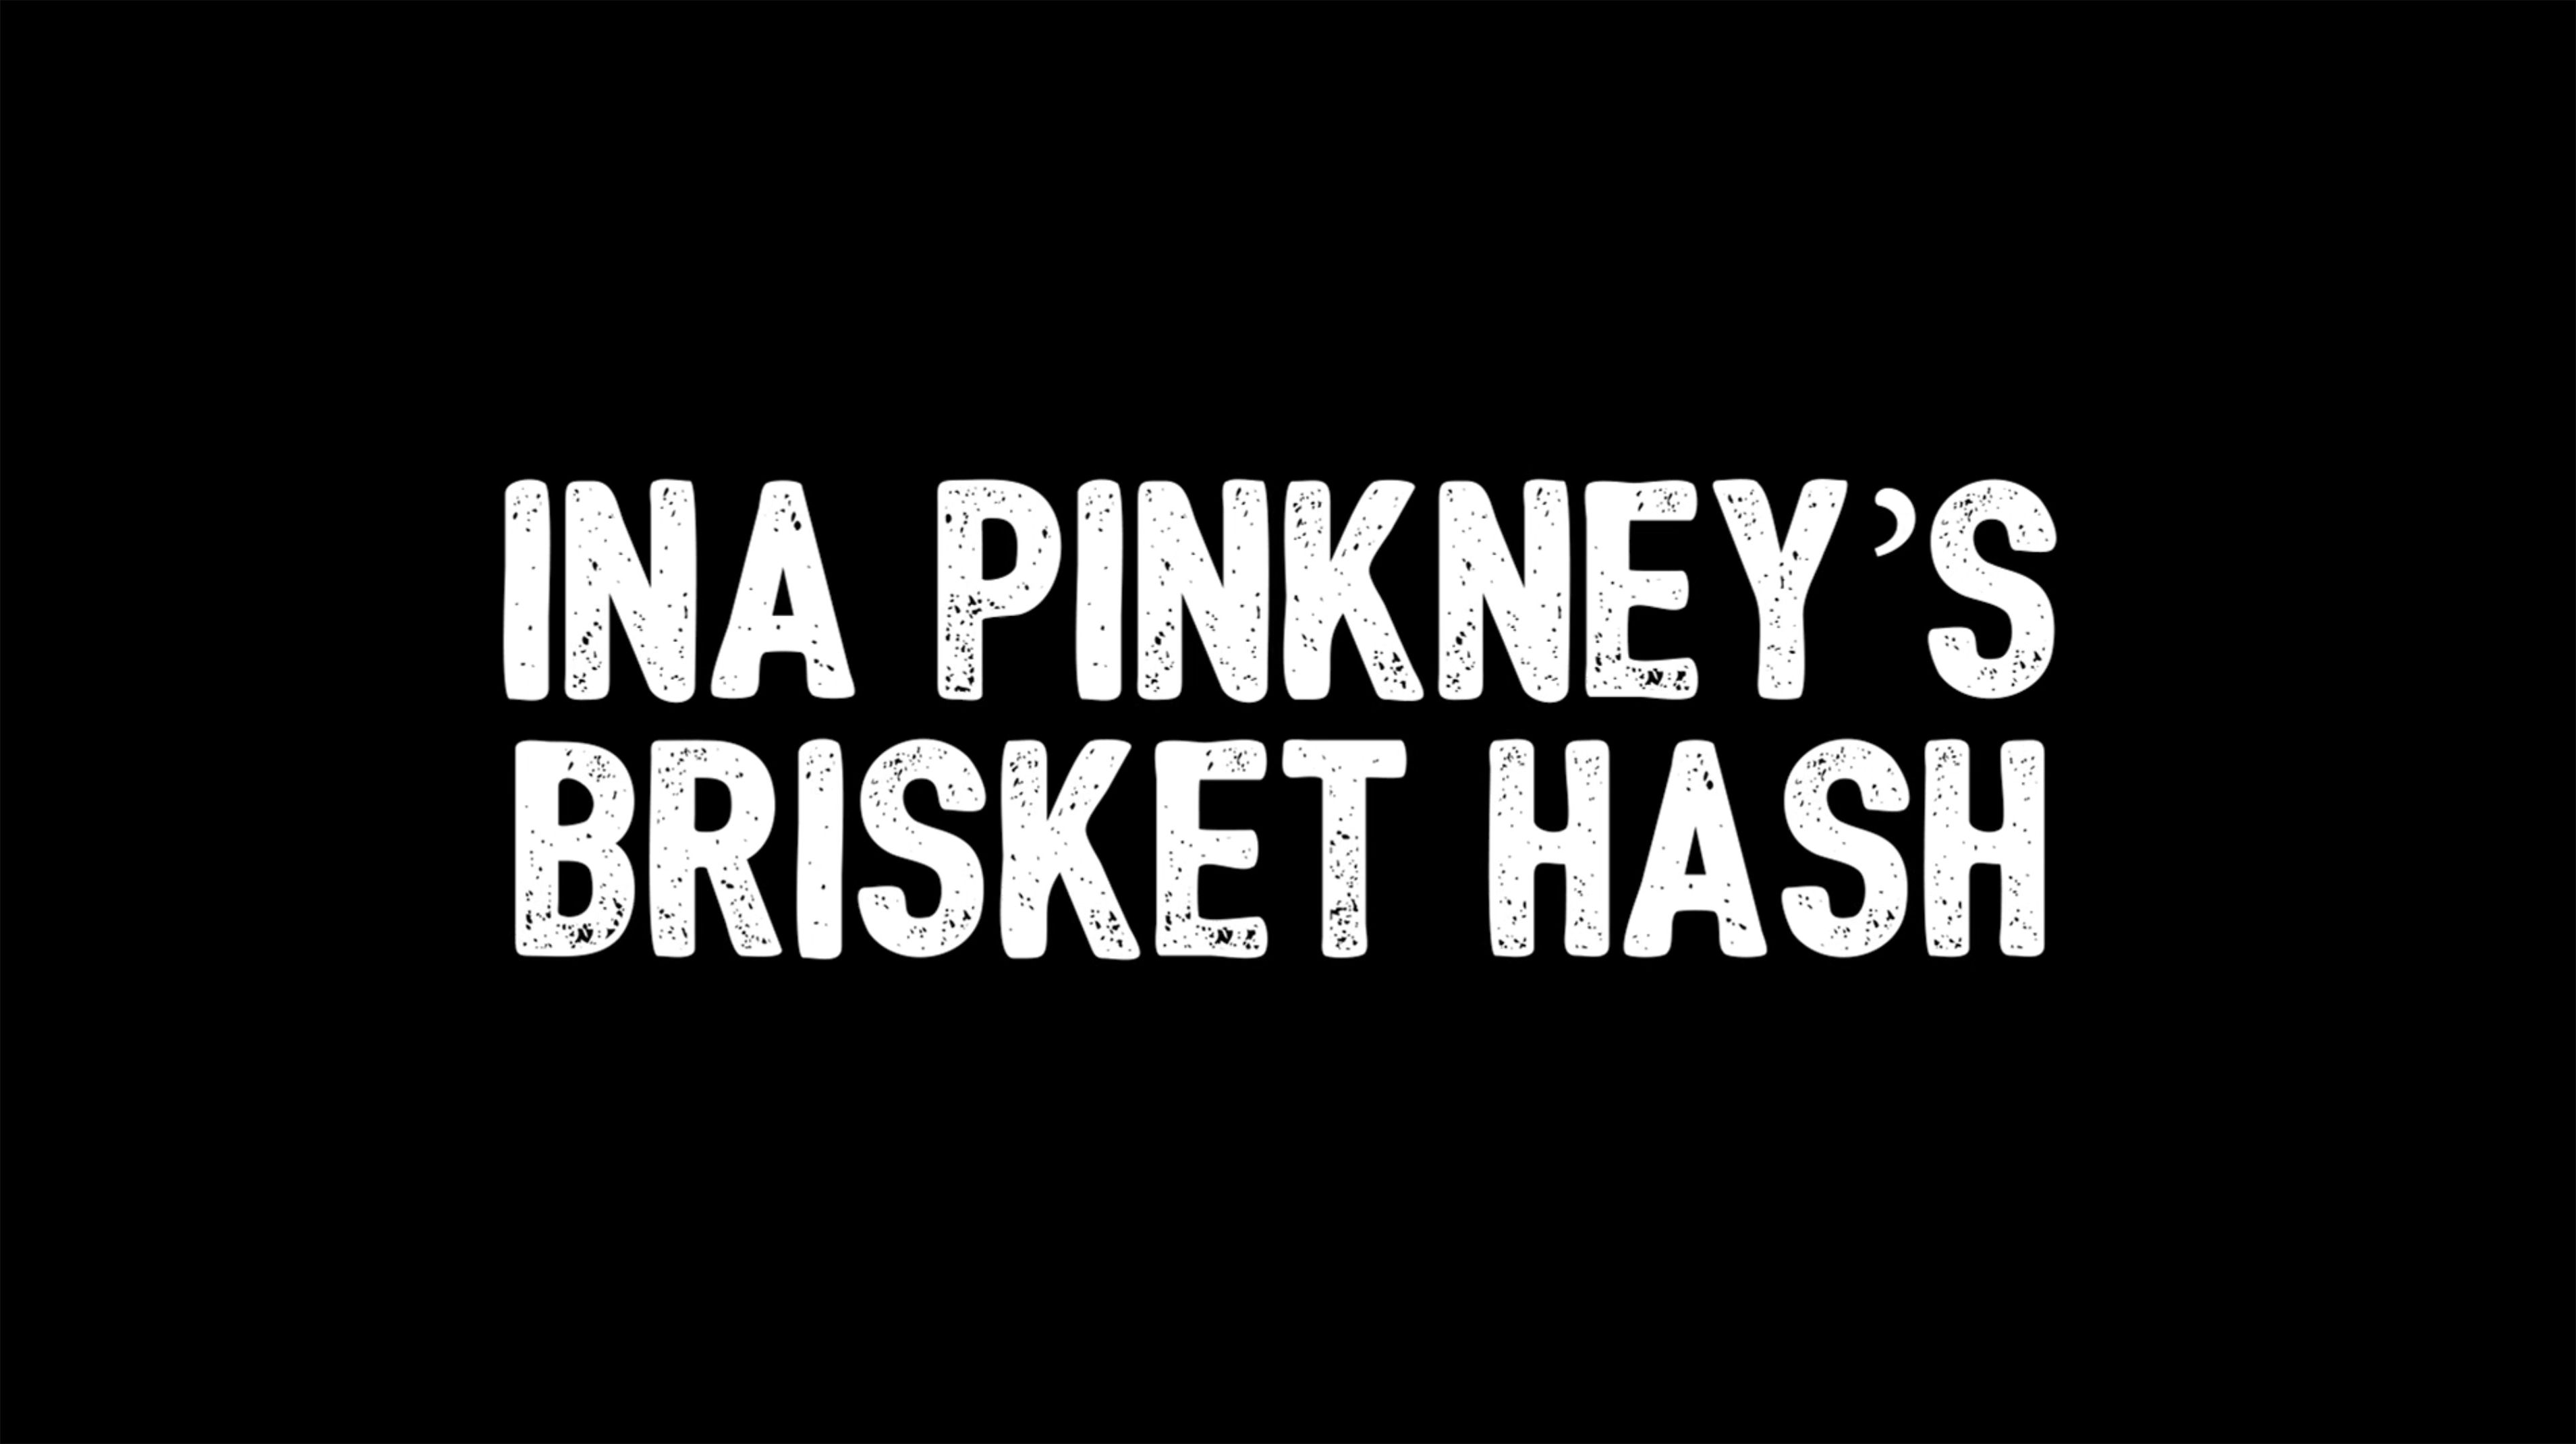 Ina Pinkney's Brisket Hash